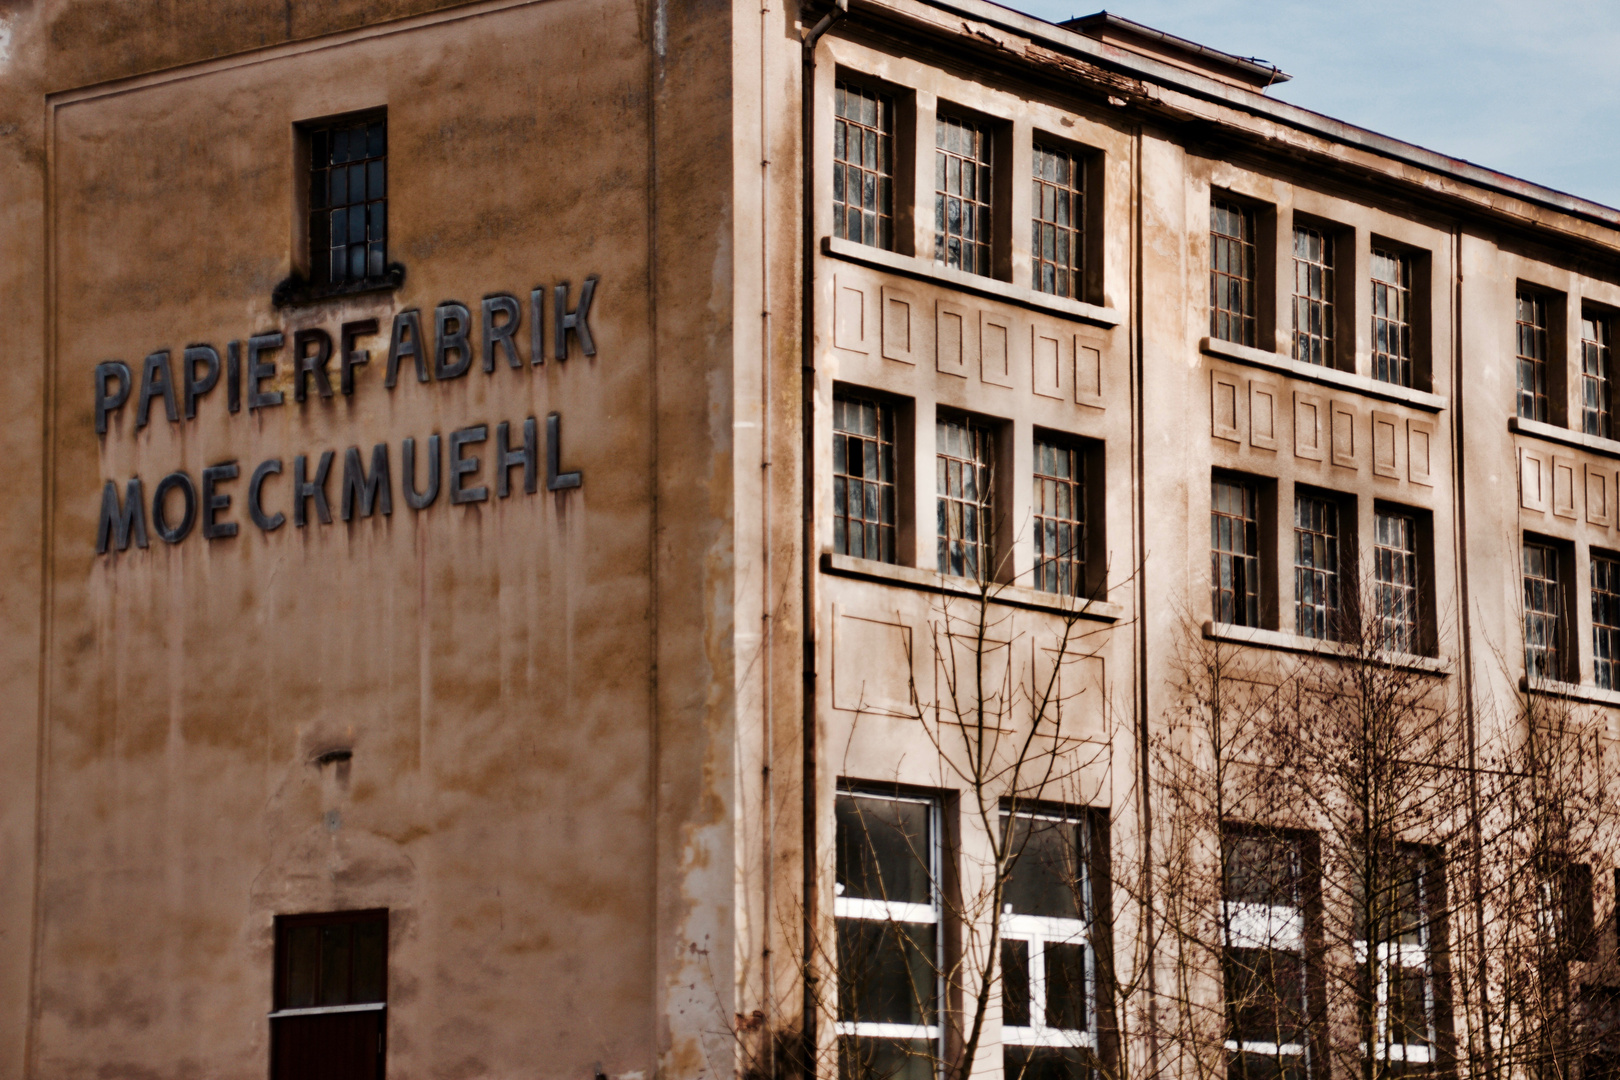 Alte Papierfabrik